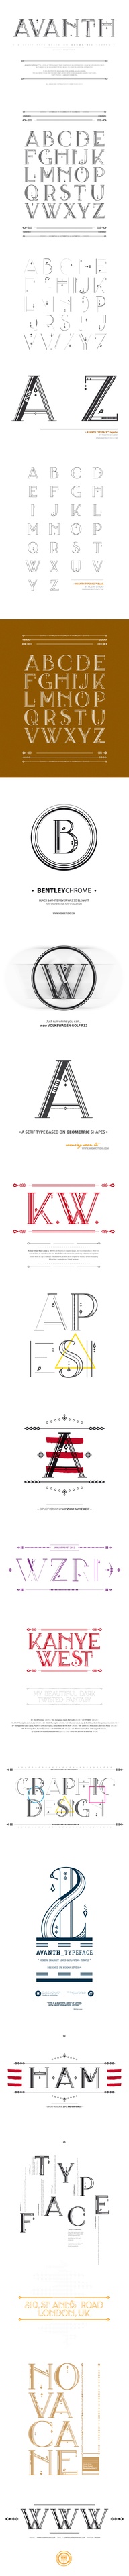 typographie pinterest design